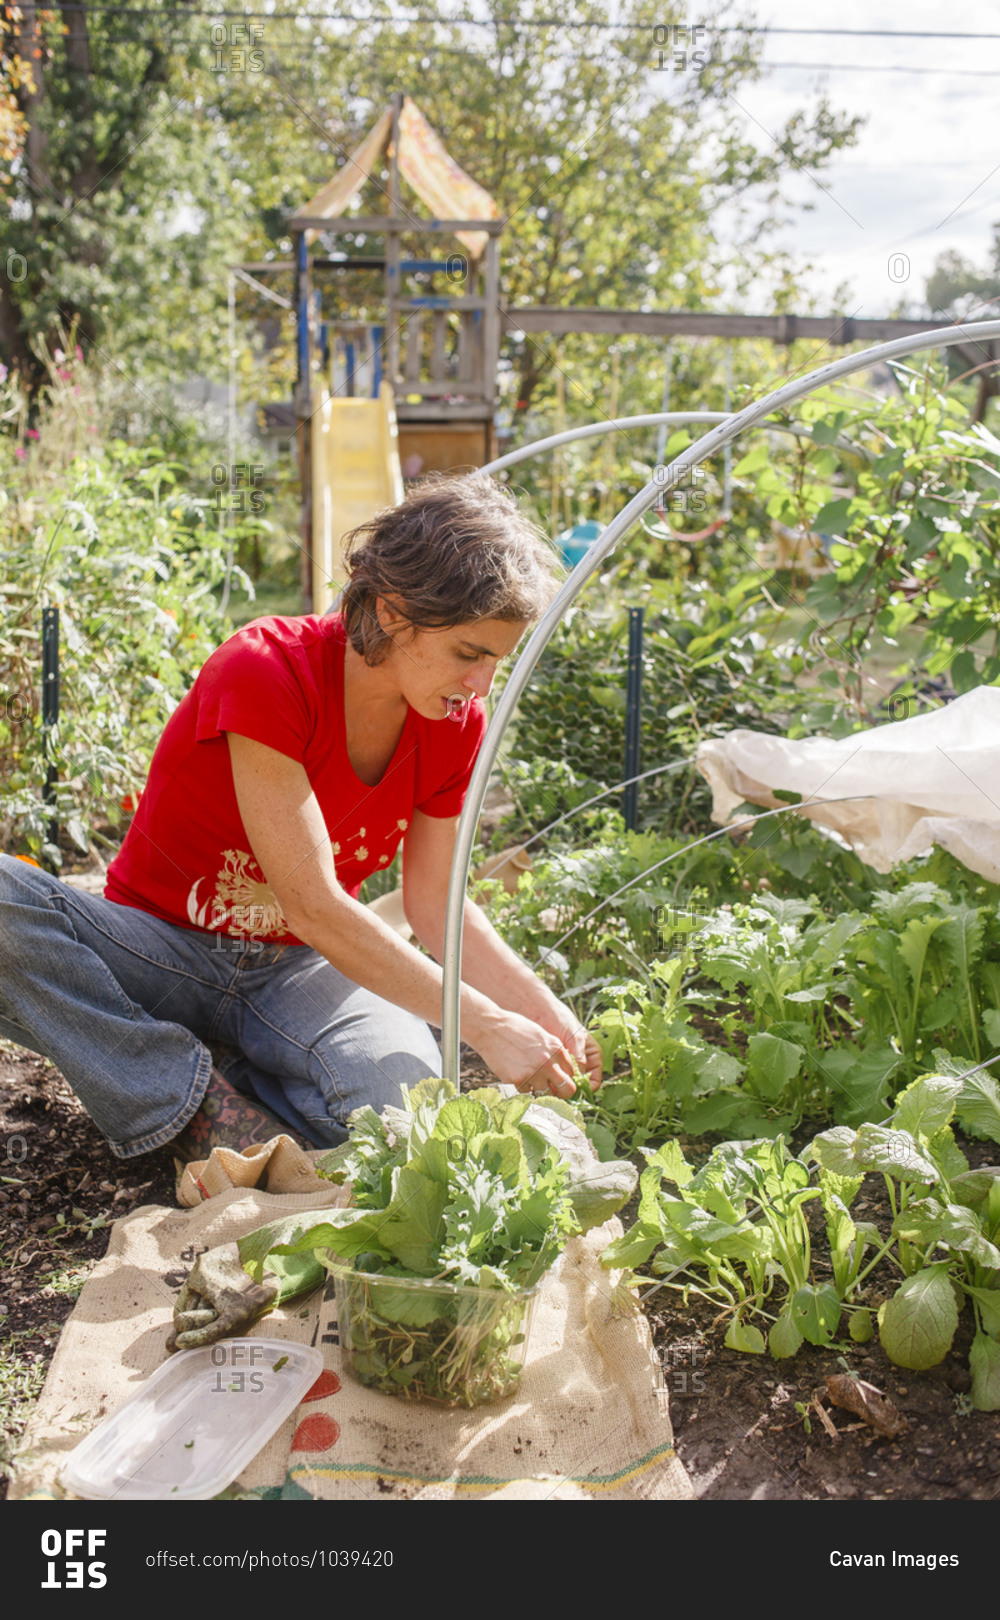 A woman picks leafy greens from her backyard vegetable garden in sun